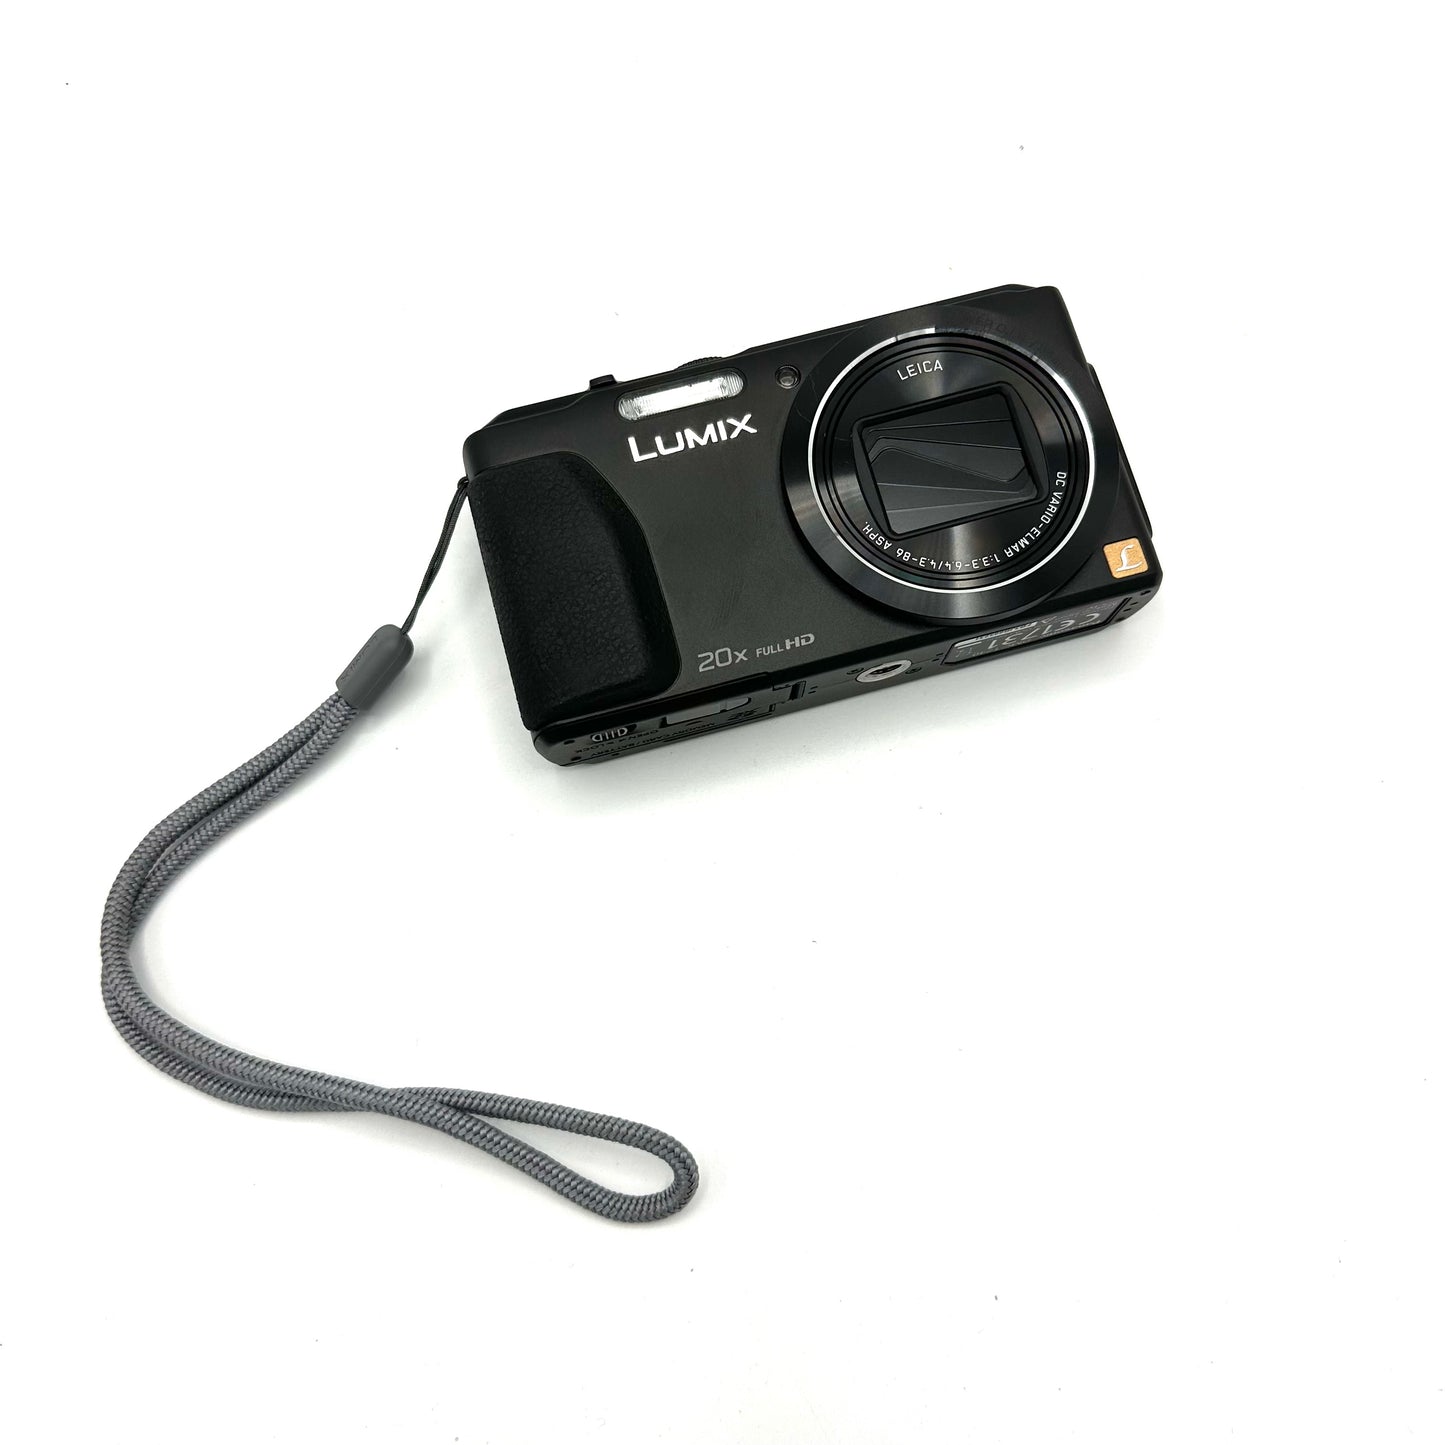 Panasonic Lumix T240 Digital Camera